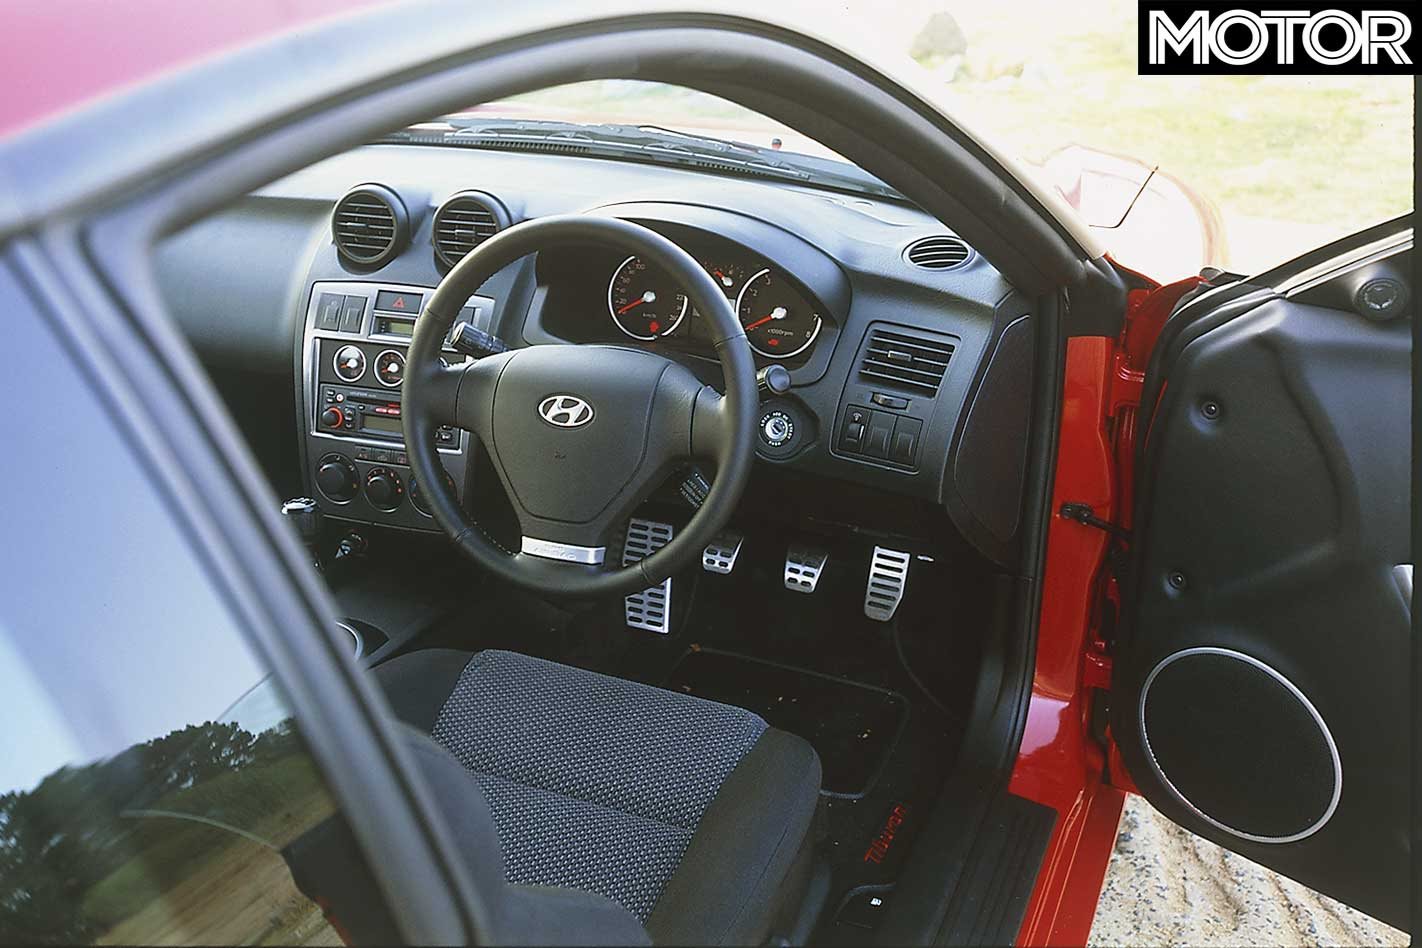 2002 Hyundai Tiburon V6 Review Classic Motor